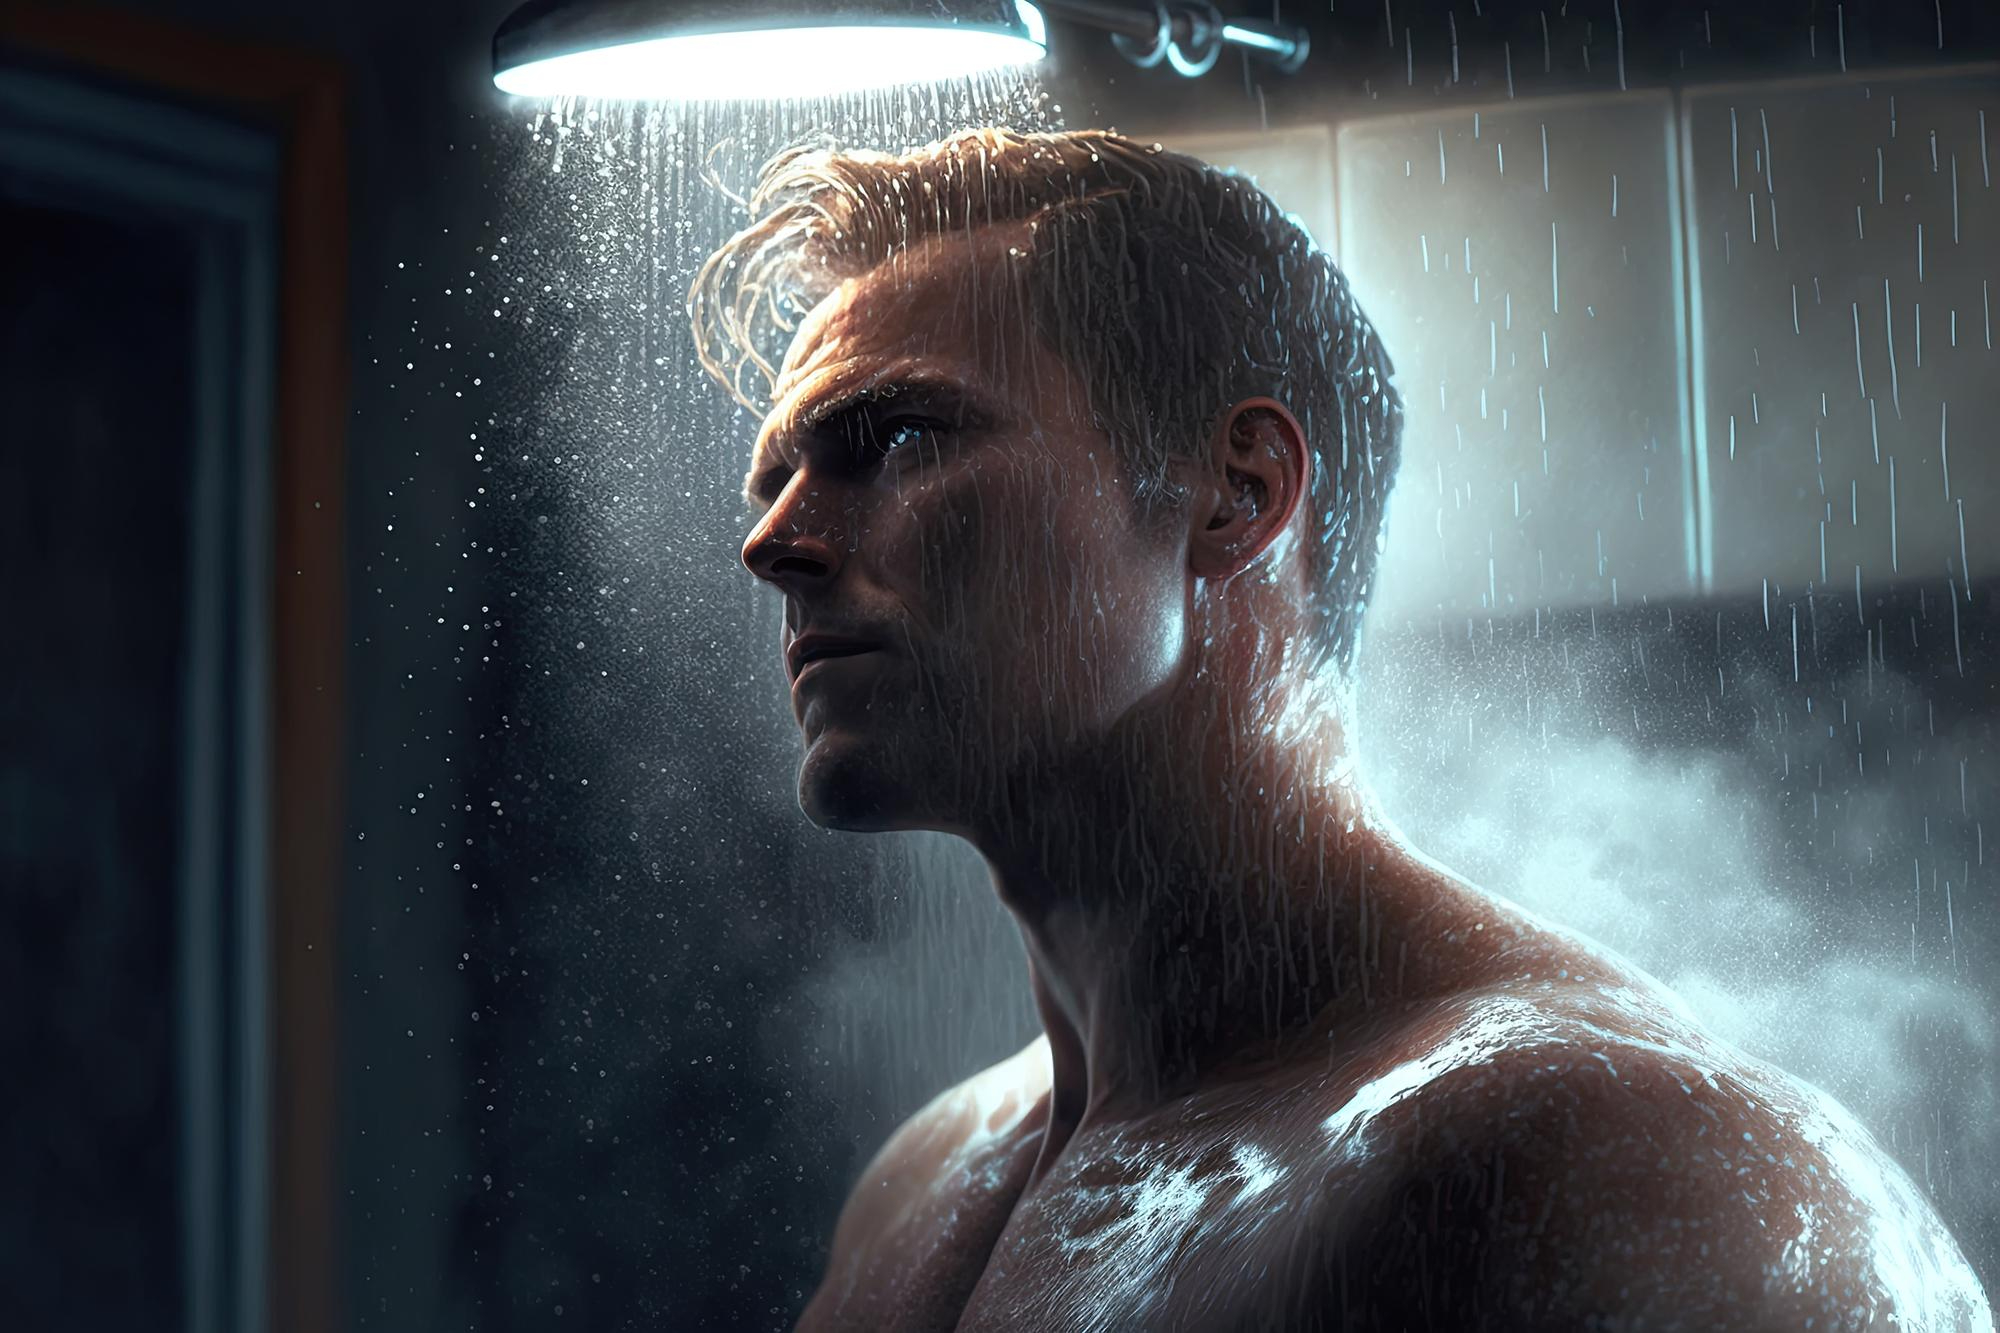 portrait-muscular-male-athlete-washing-shower